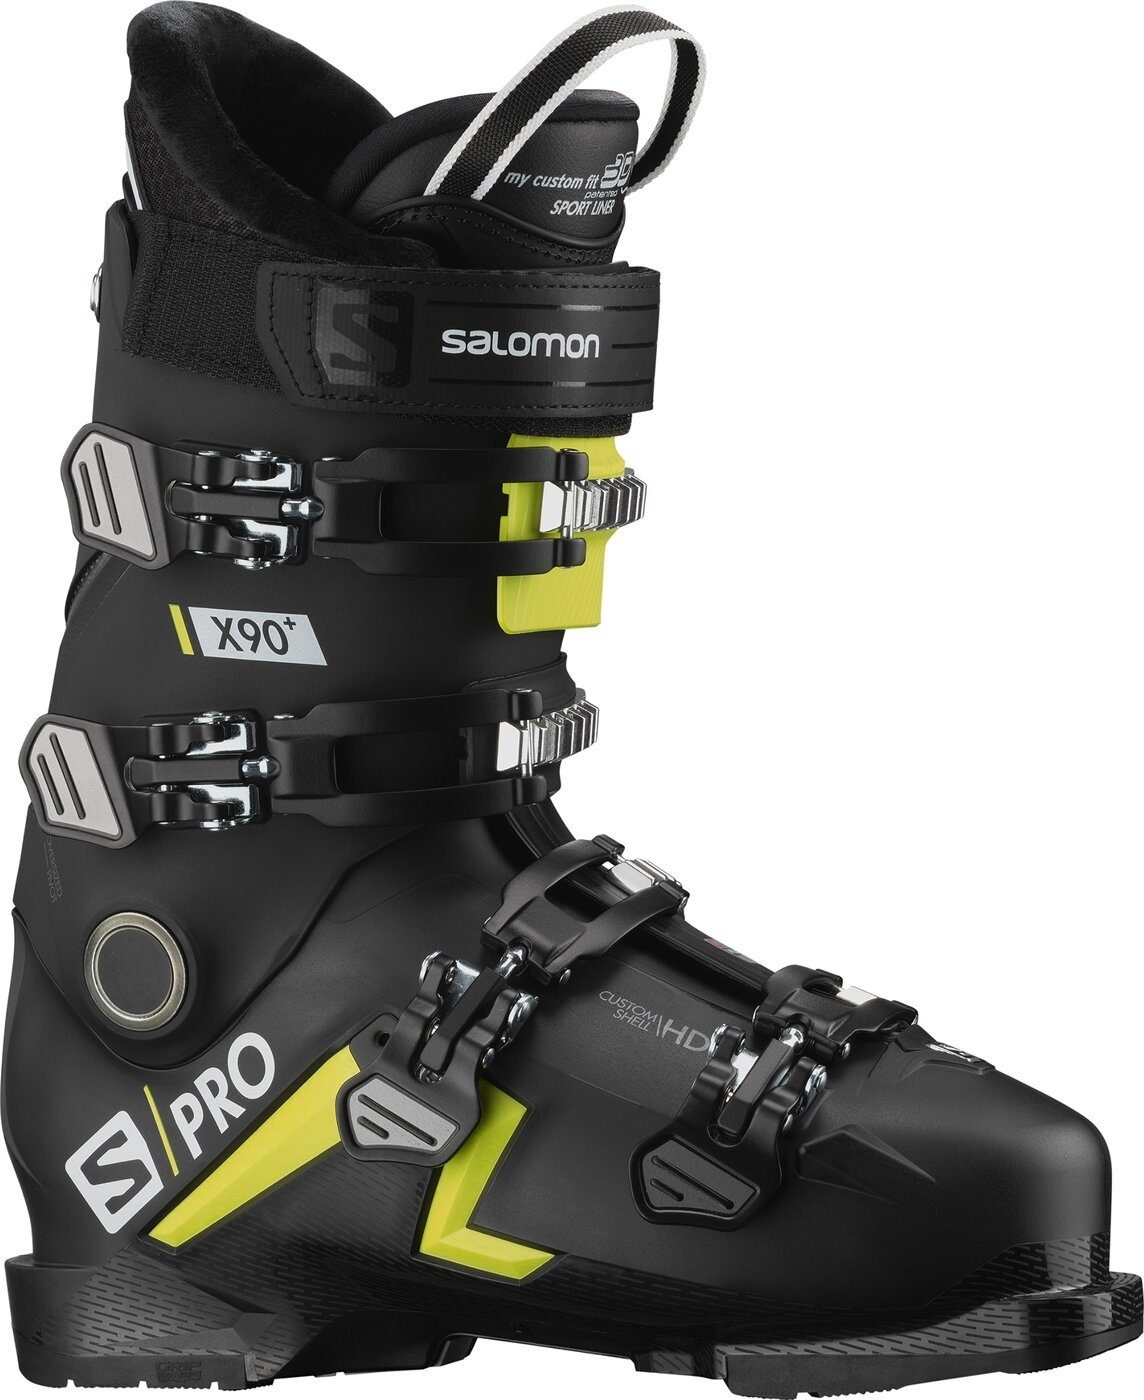 CS Herren Skischuhe Skischuh X90+ Salomon black/yellow - - GW S/Pro